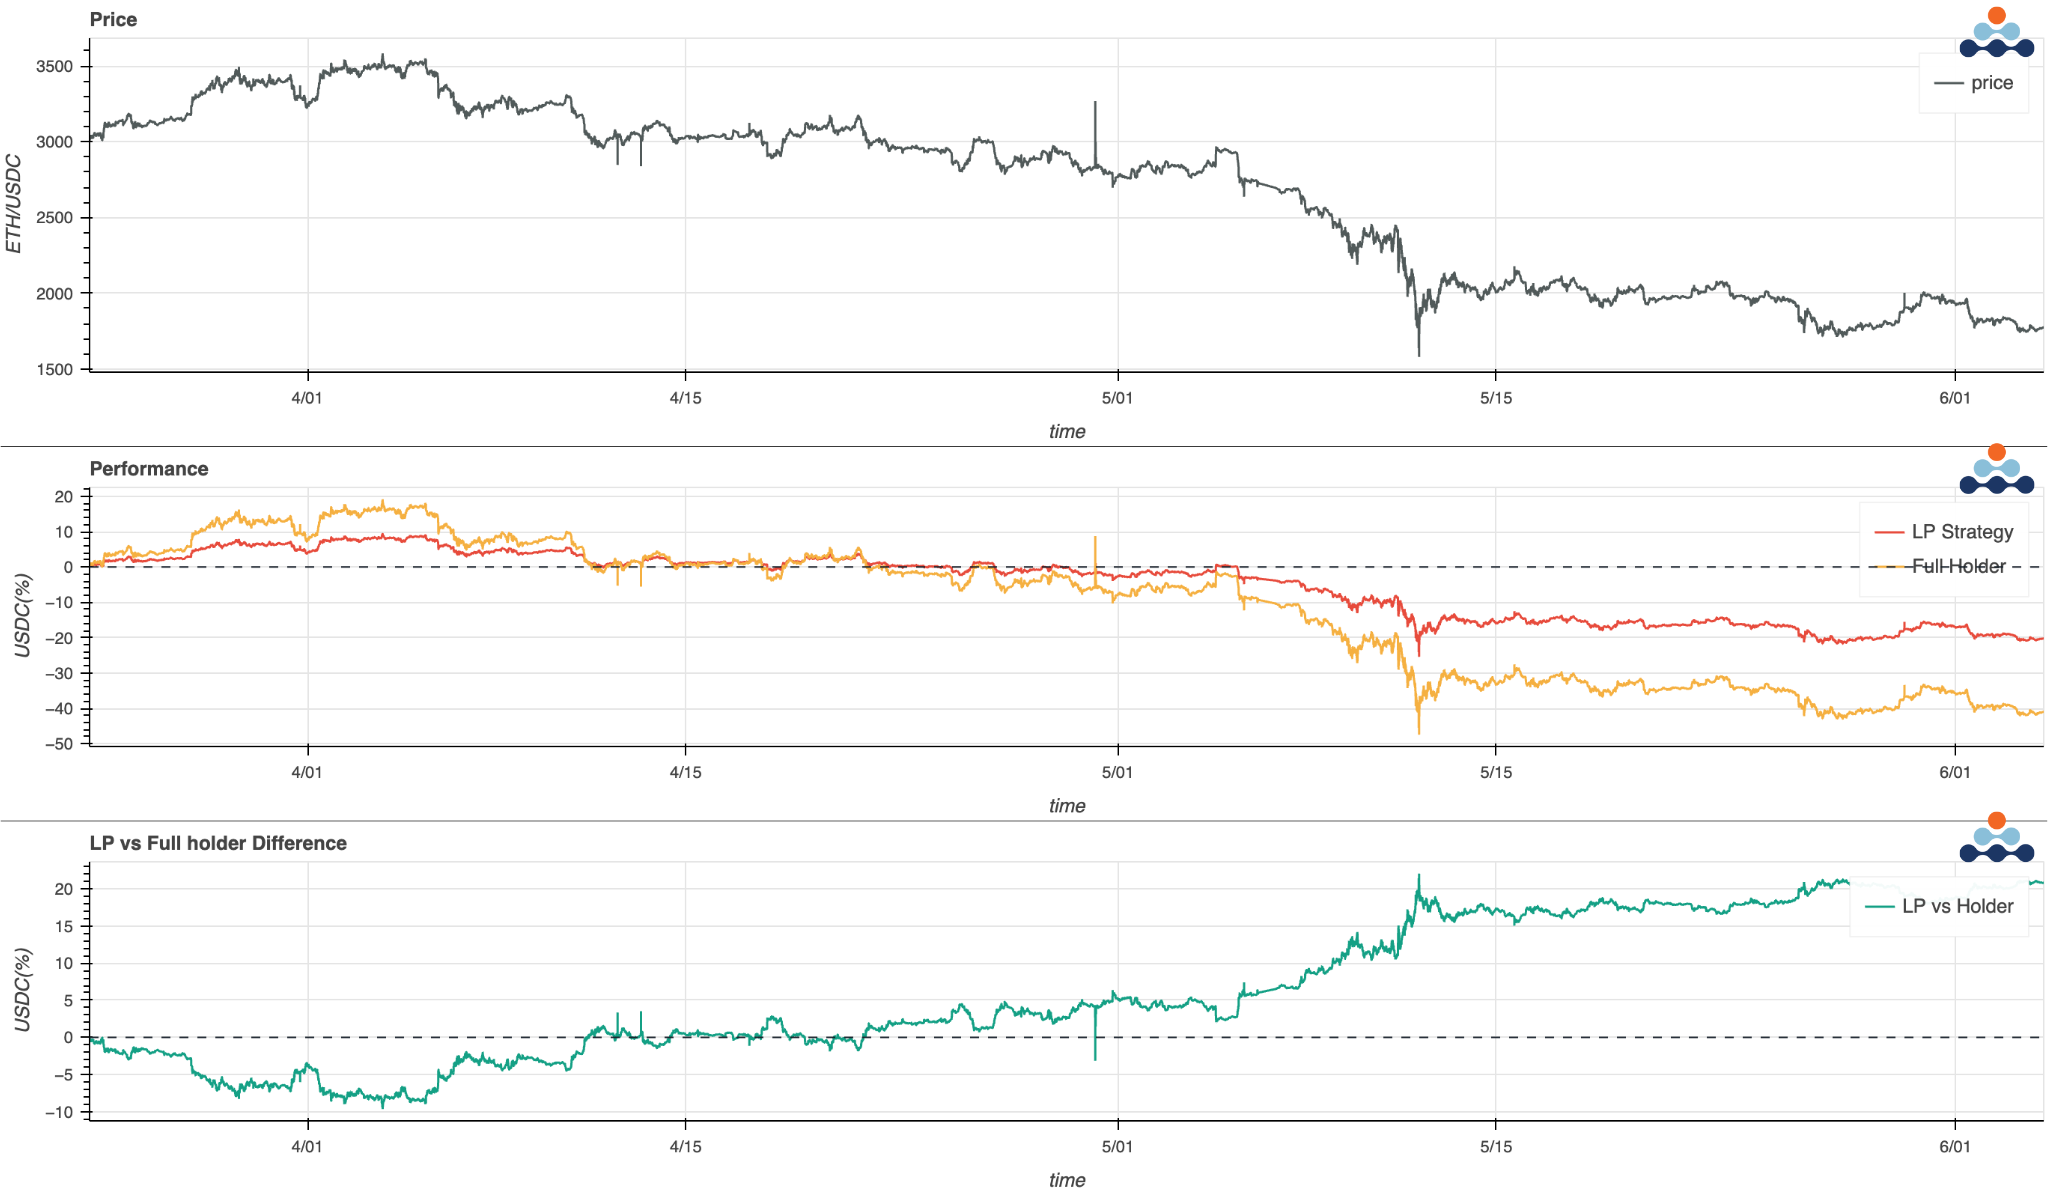 amberdata backtesting performance simulation framework charts for analyzing LP performance against holding ETH